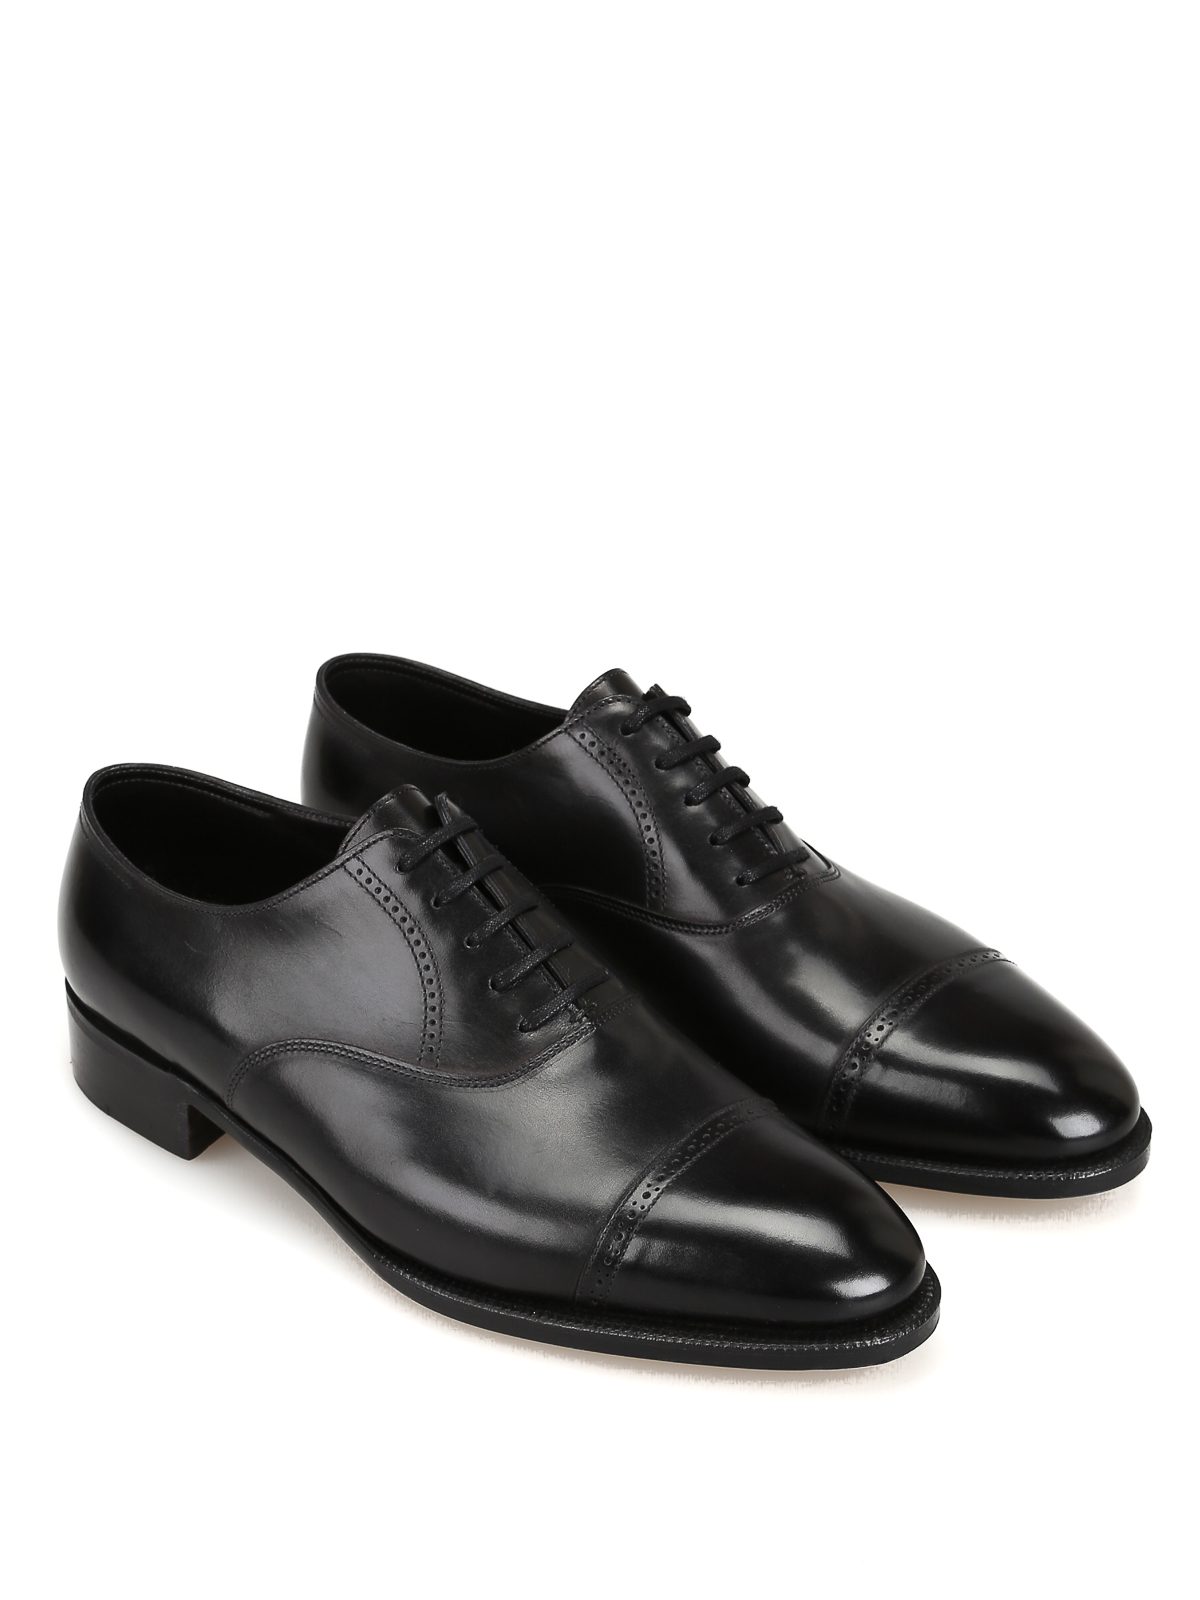 Classic shoes John Lobb - Philip II black calf leather Oxford